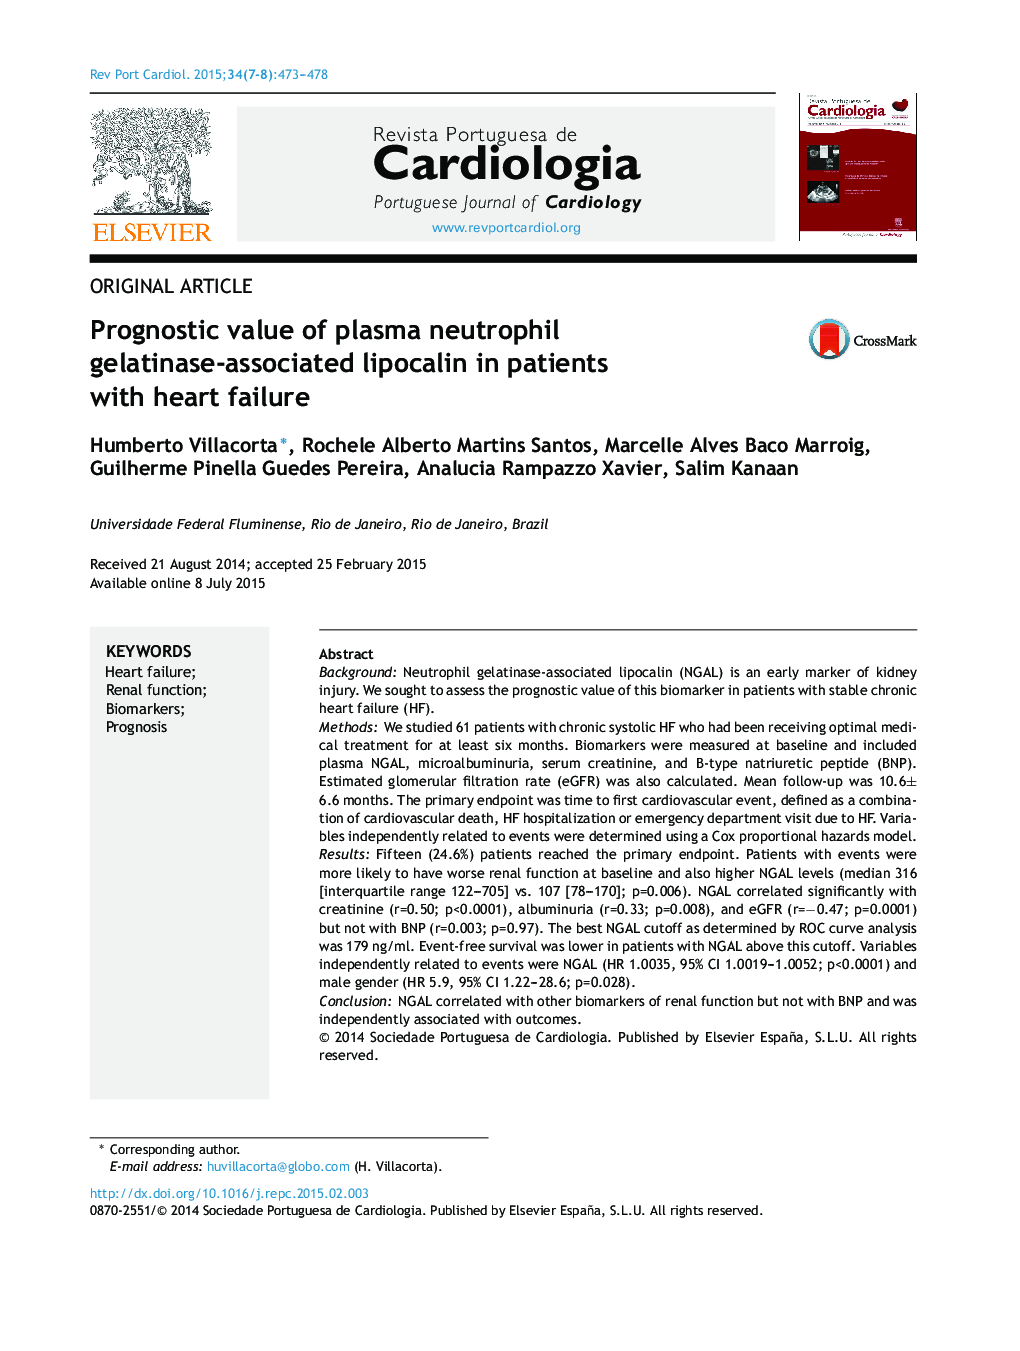 Prognostic value of plasma neutrophil gelatinase-associated lipocalin in patients with heart failure